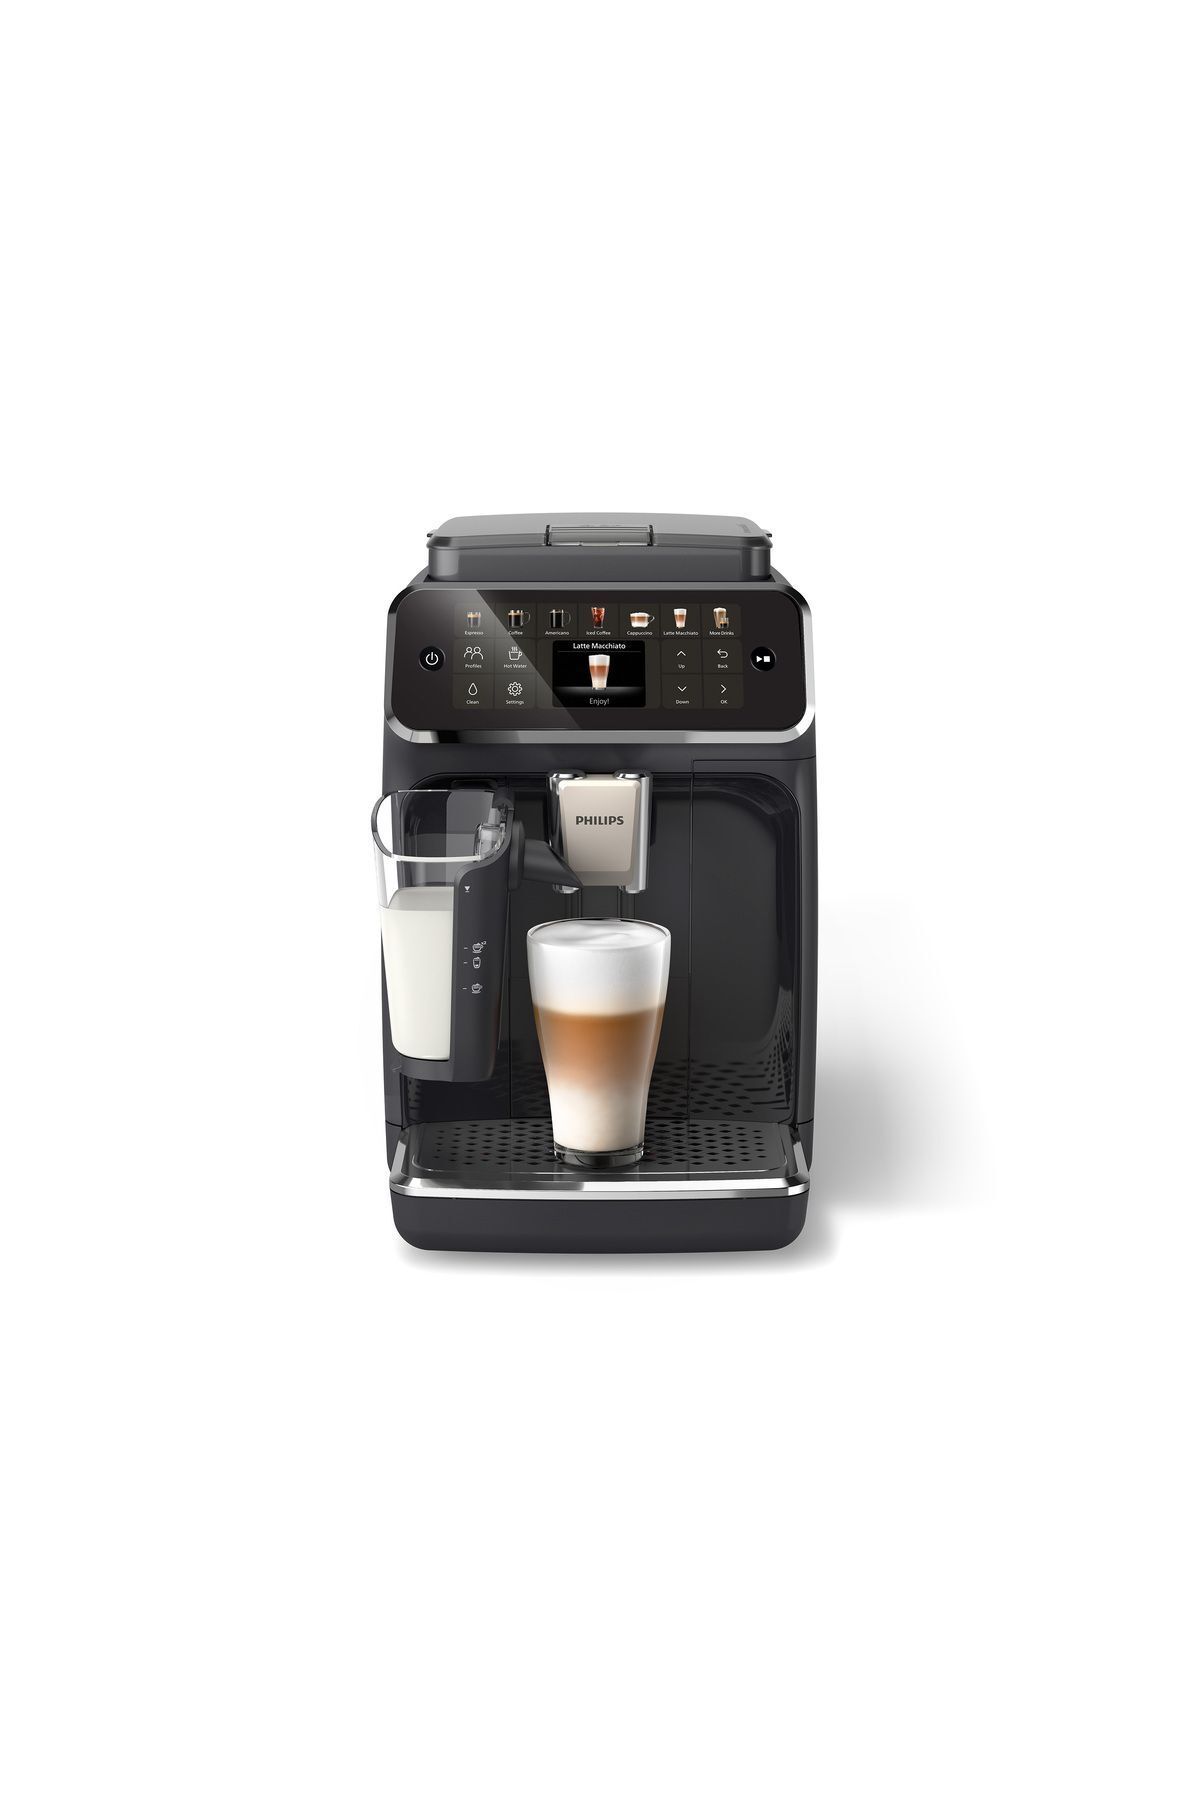 Philips Lattego Ep4441/50 Tam Otomatik Espresso Makinesi